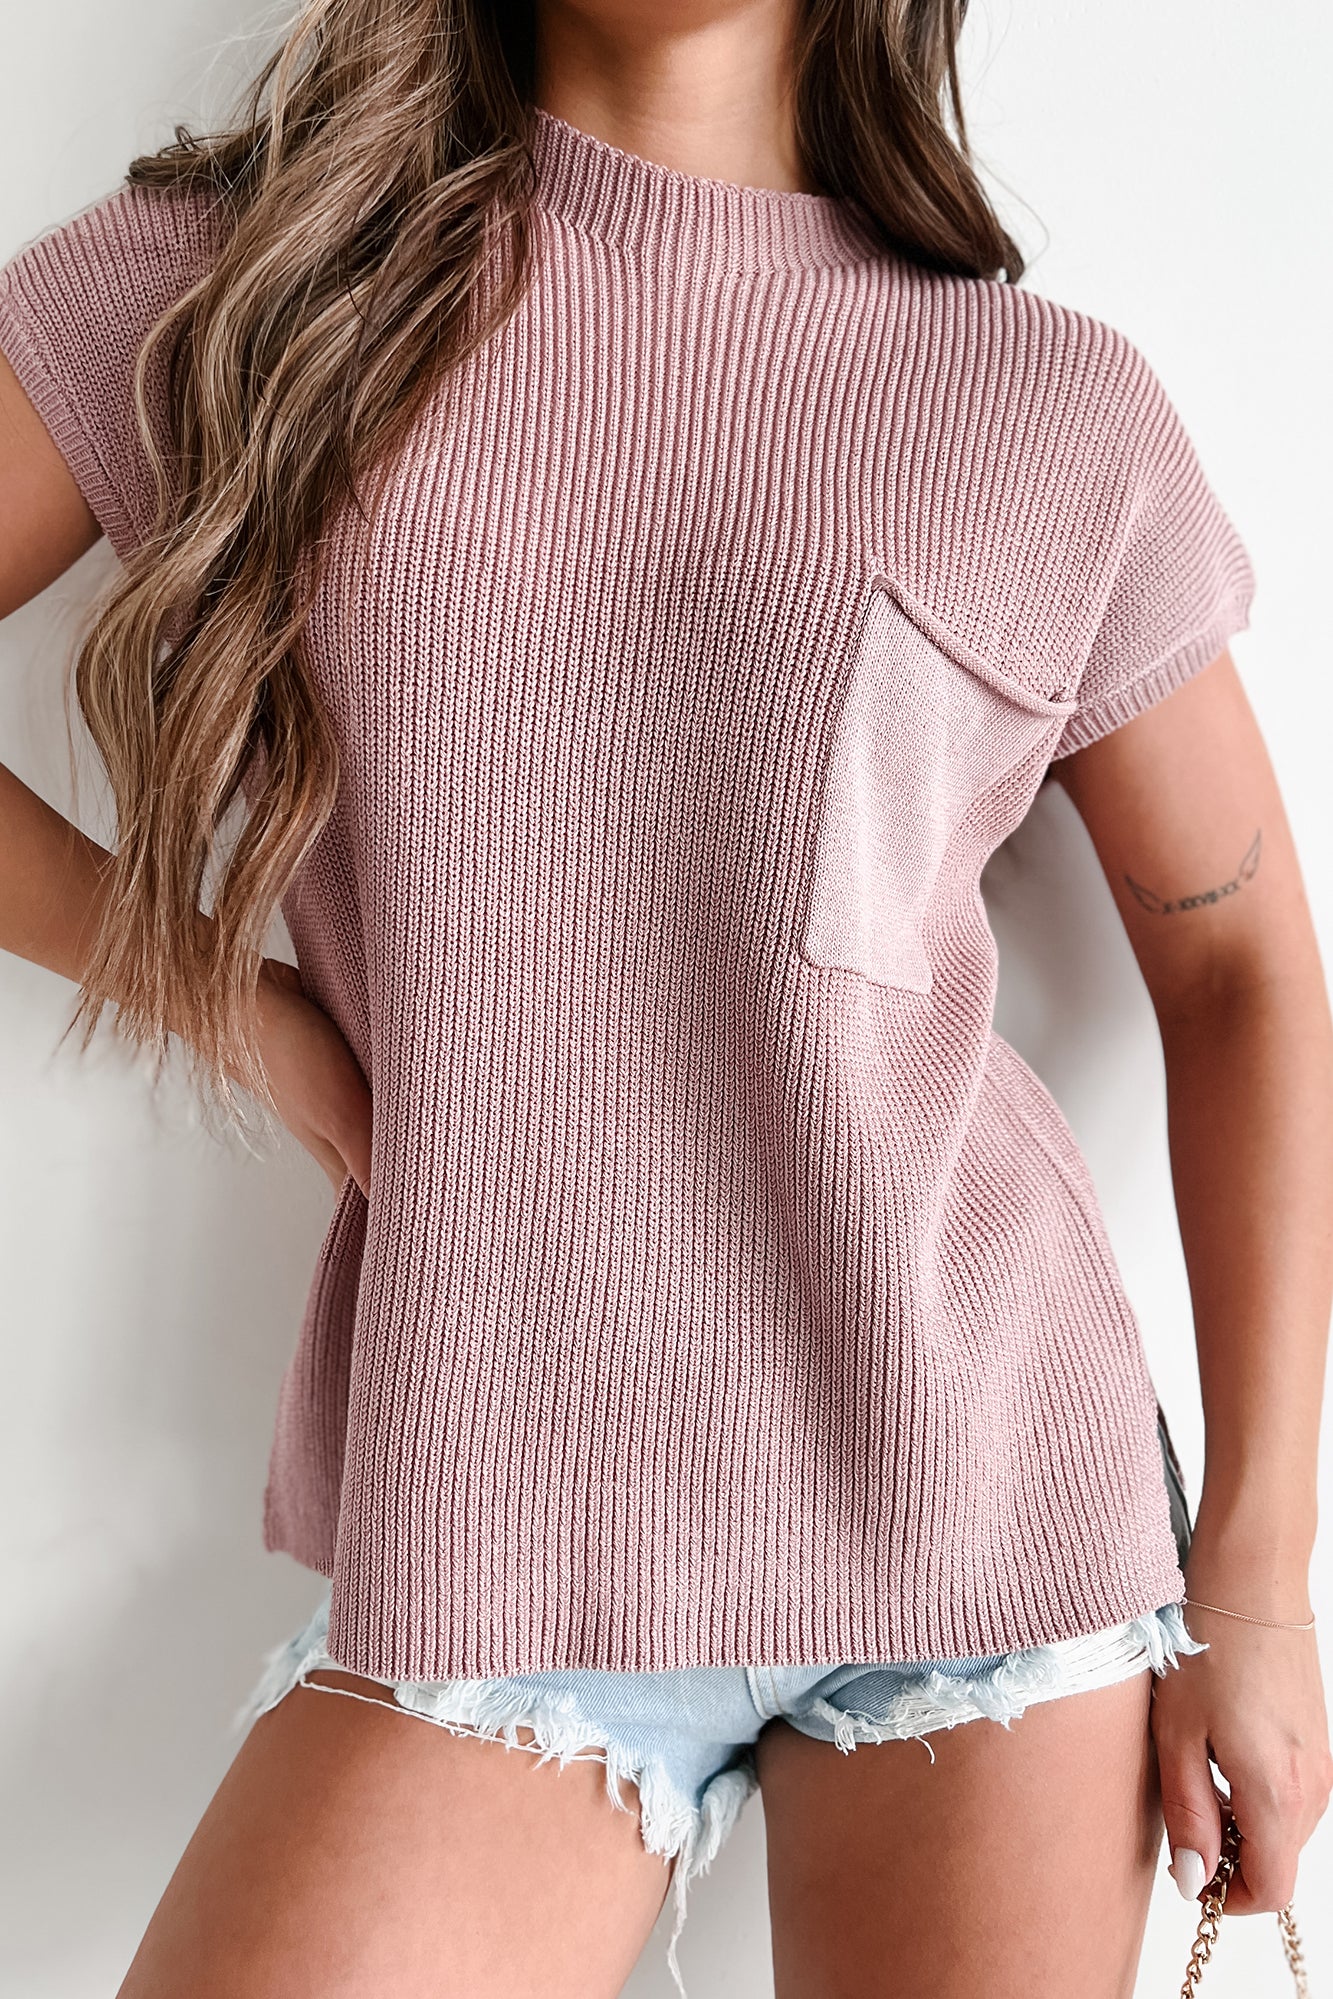 Simpler Times Sweater Knit Short Sleeve Top (Mauve) - NanaMacs